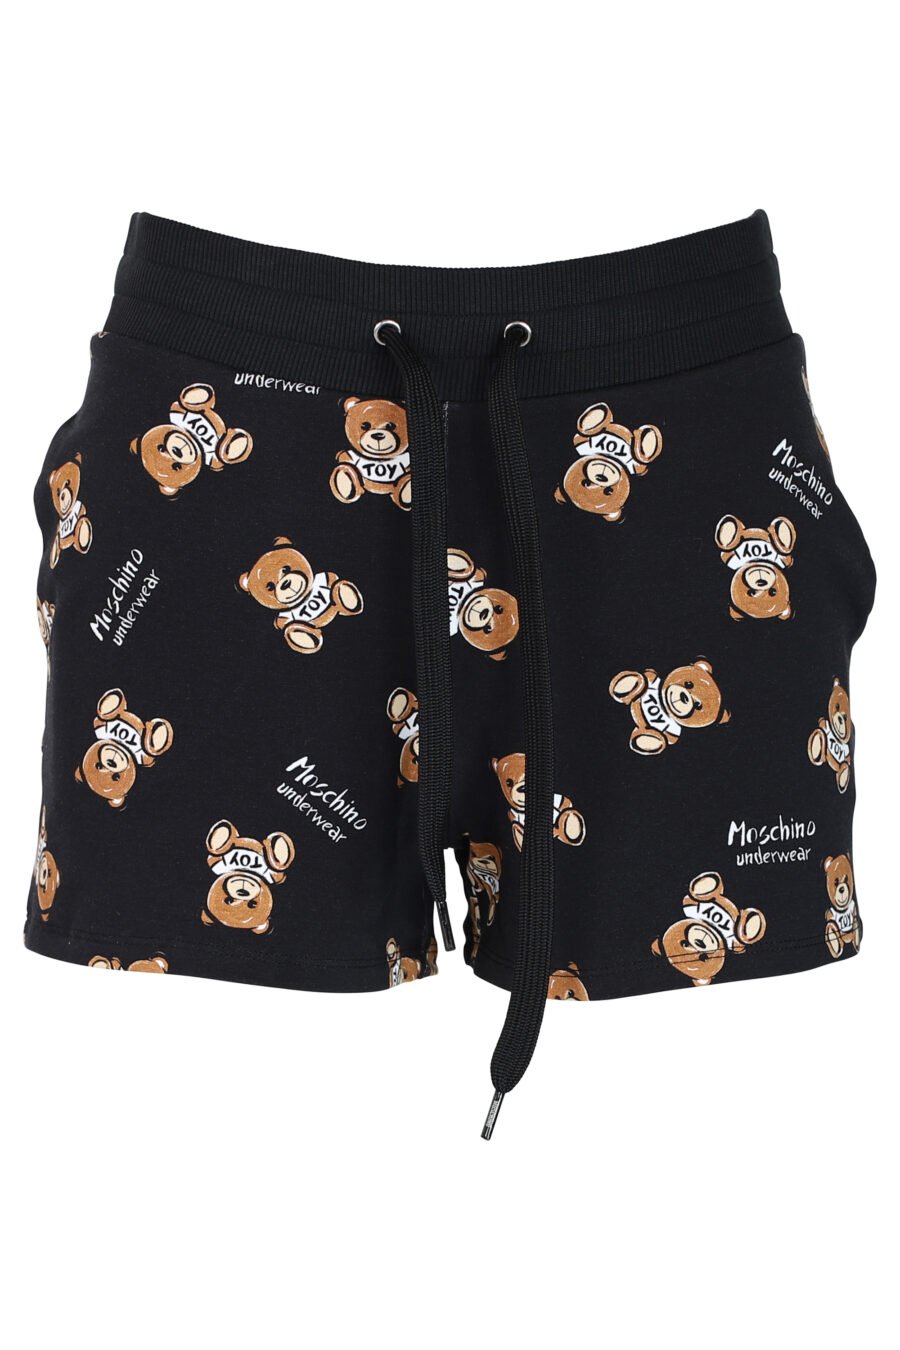 Black shorts "all over logo" bear underbear - IMG 0298